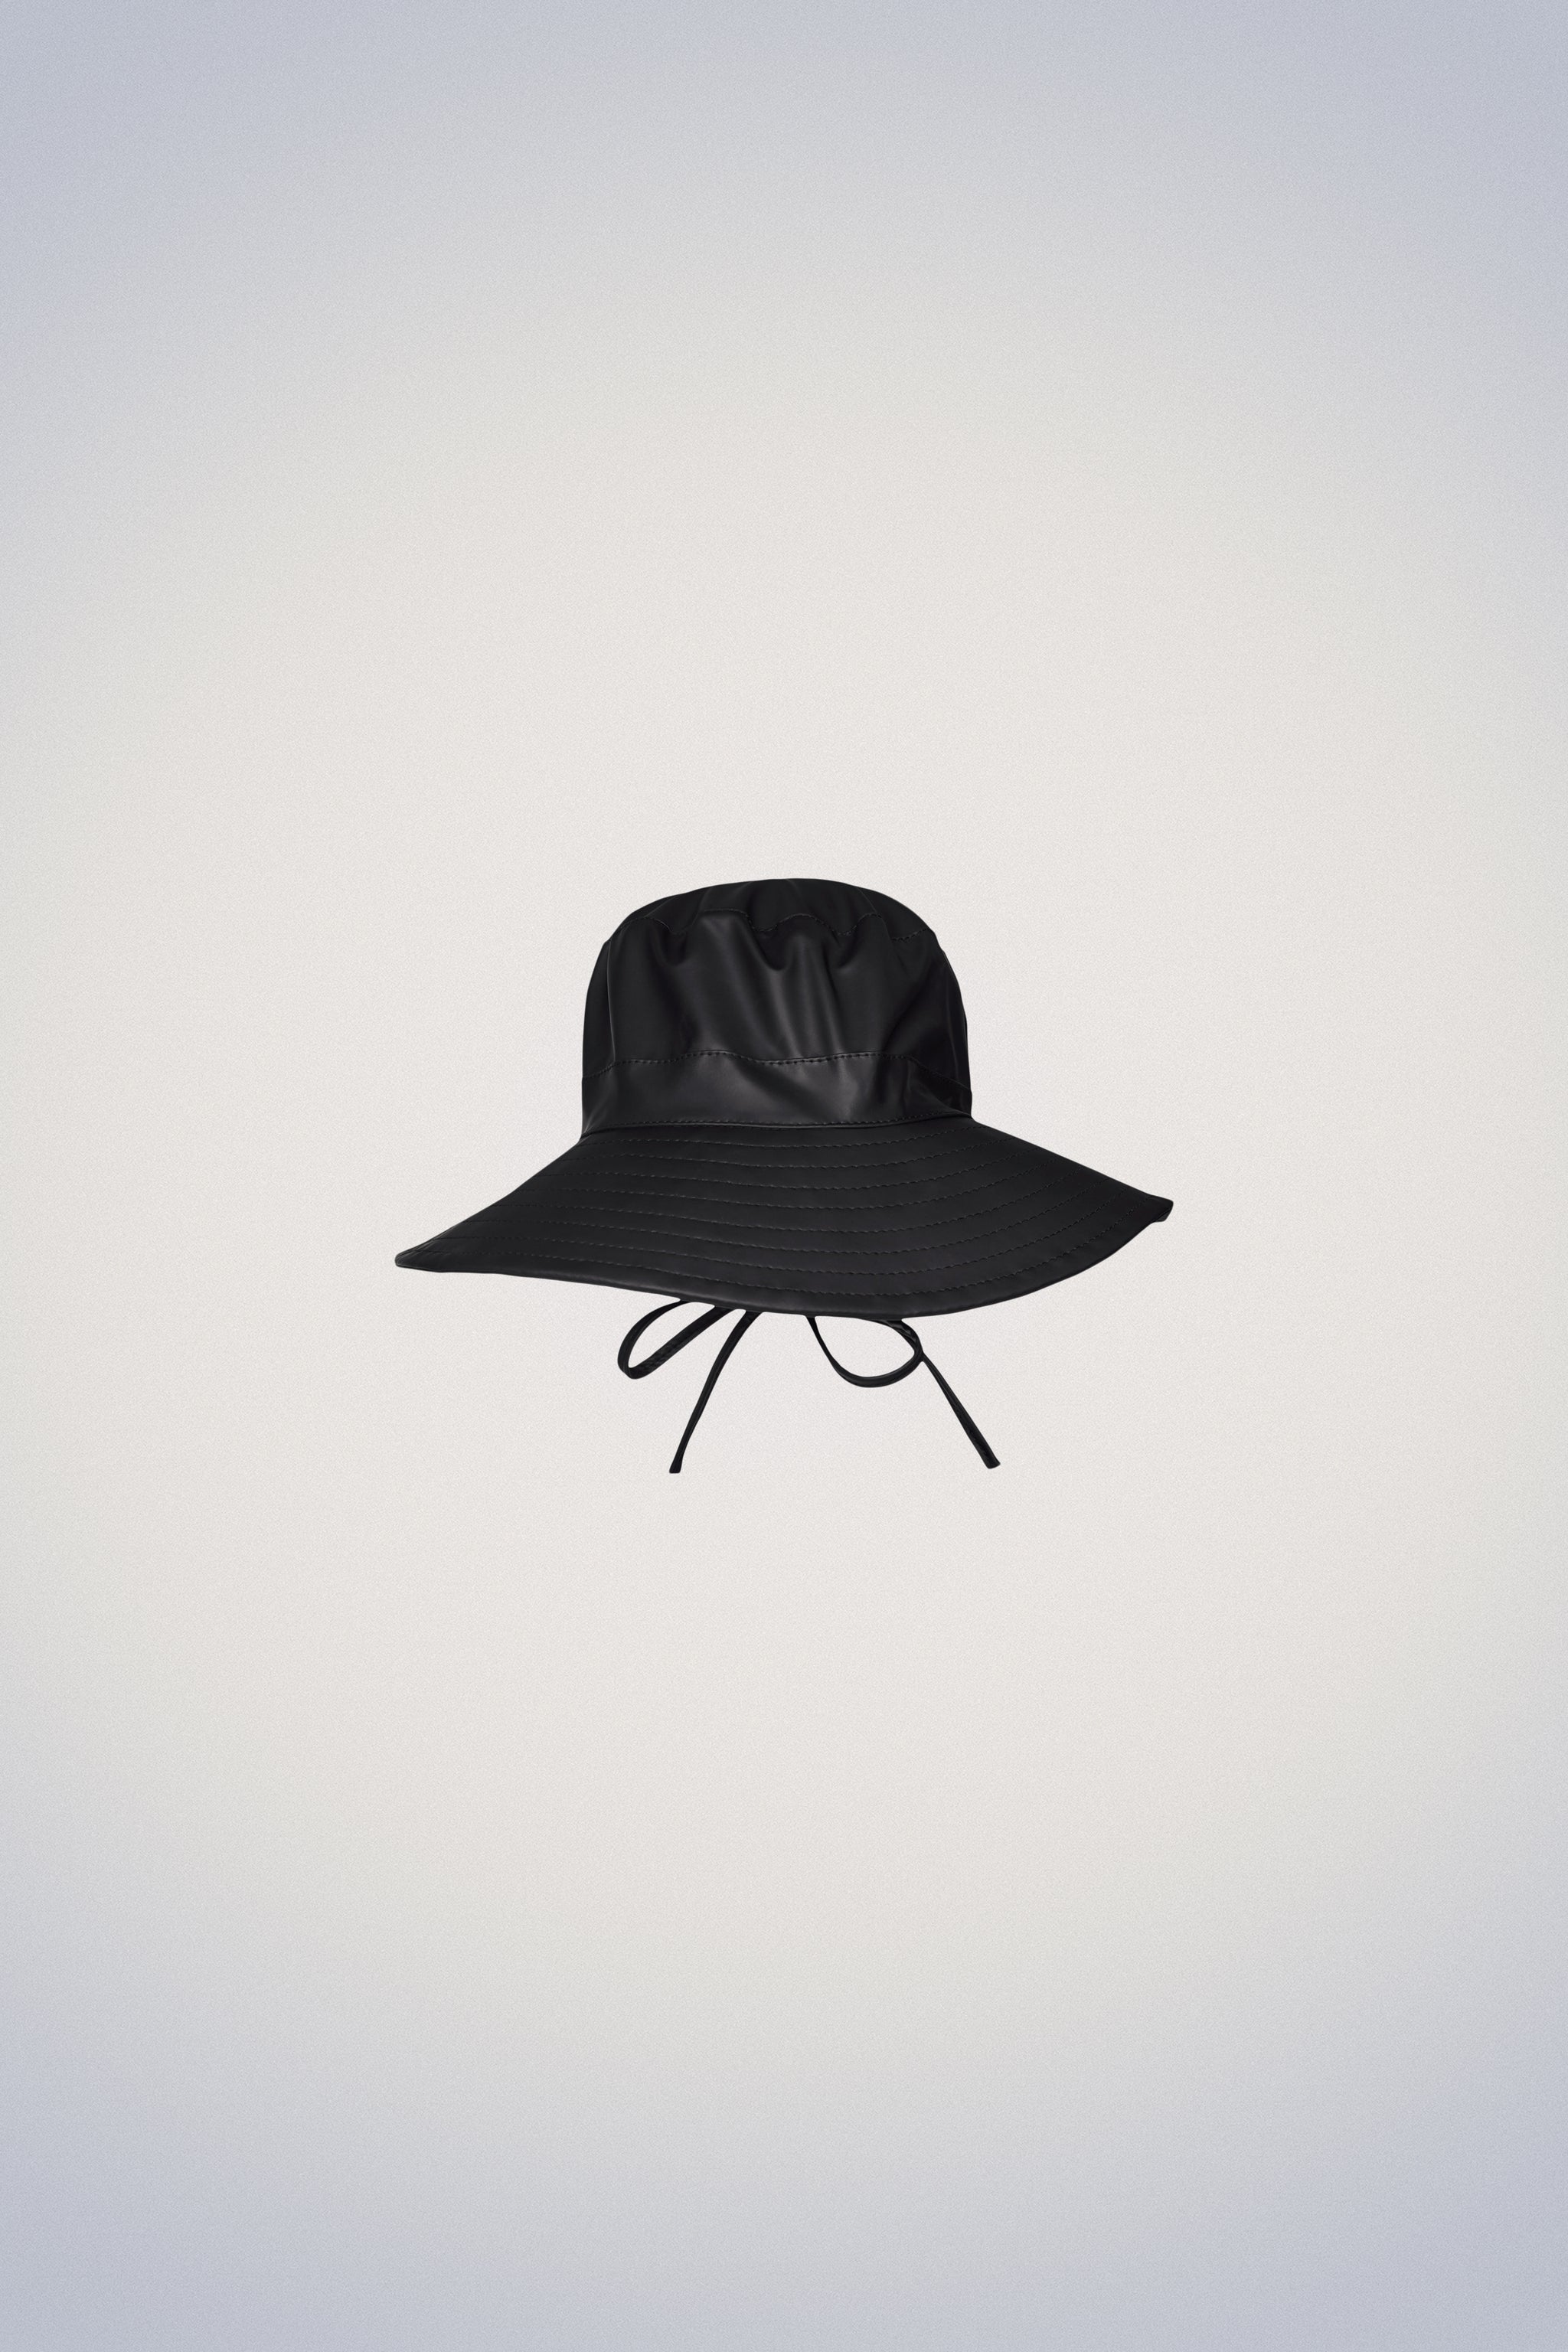 Rains® Boonie Hat in Black for $50 | 2-Year Warranty